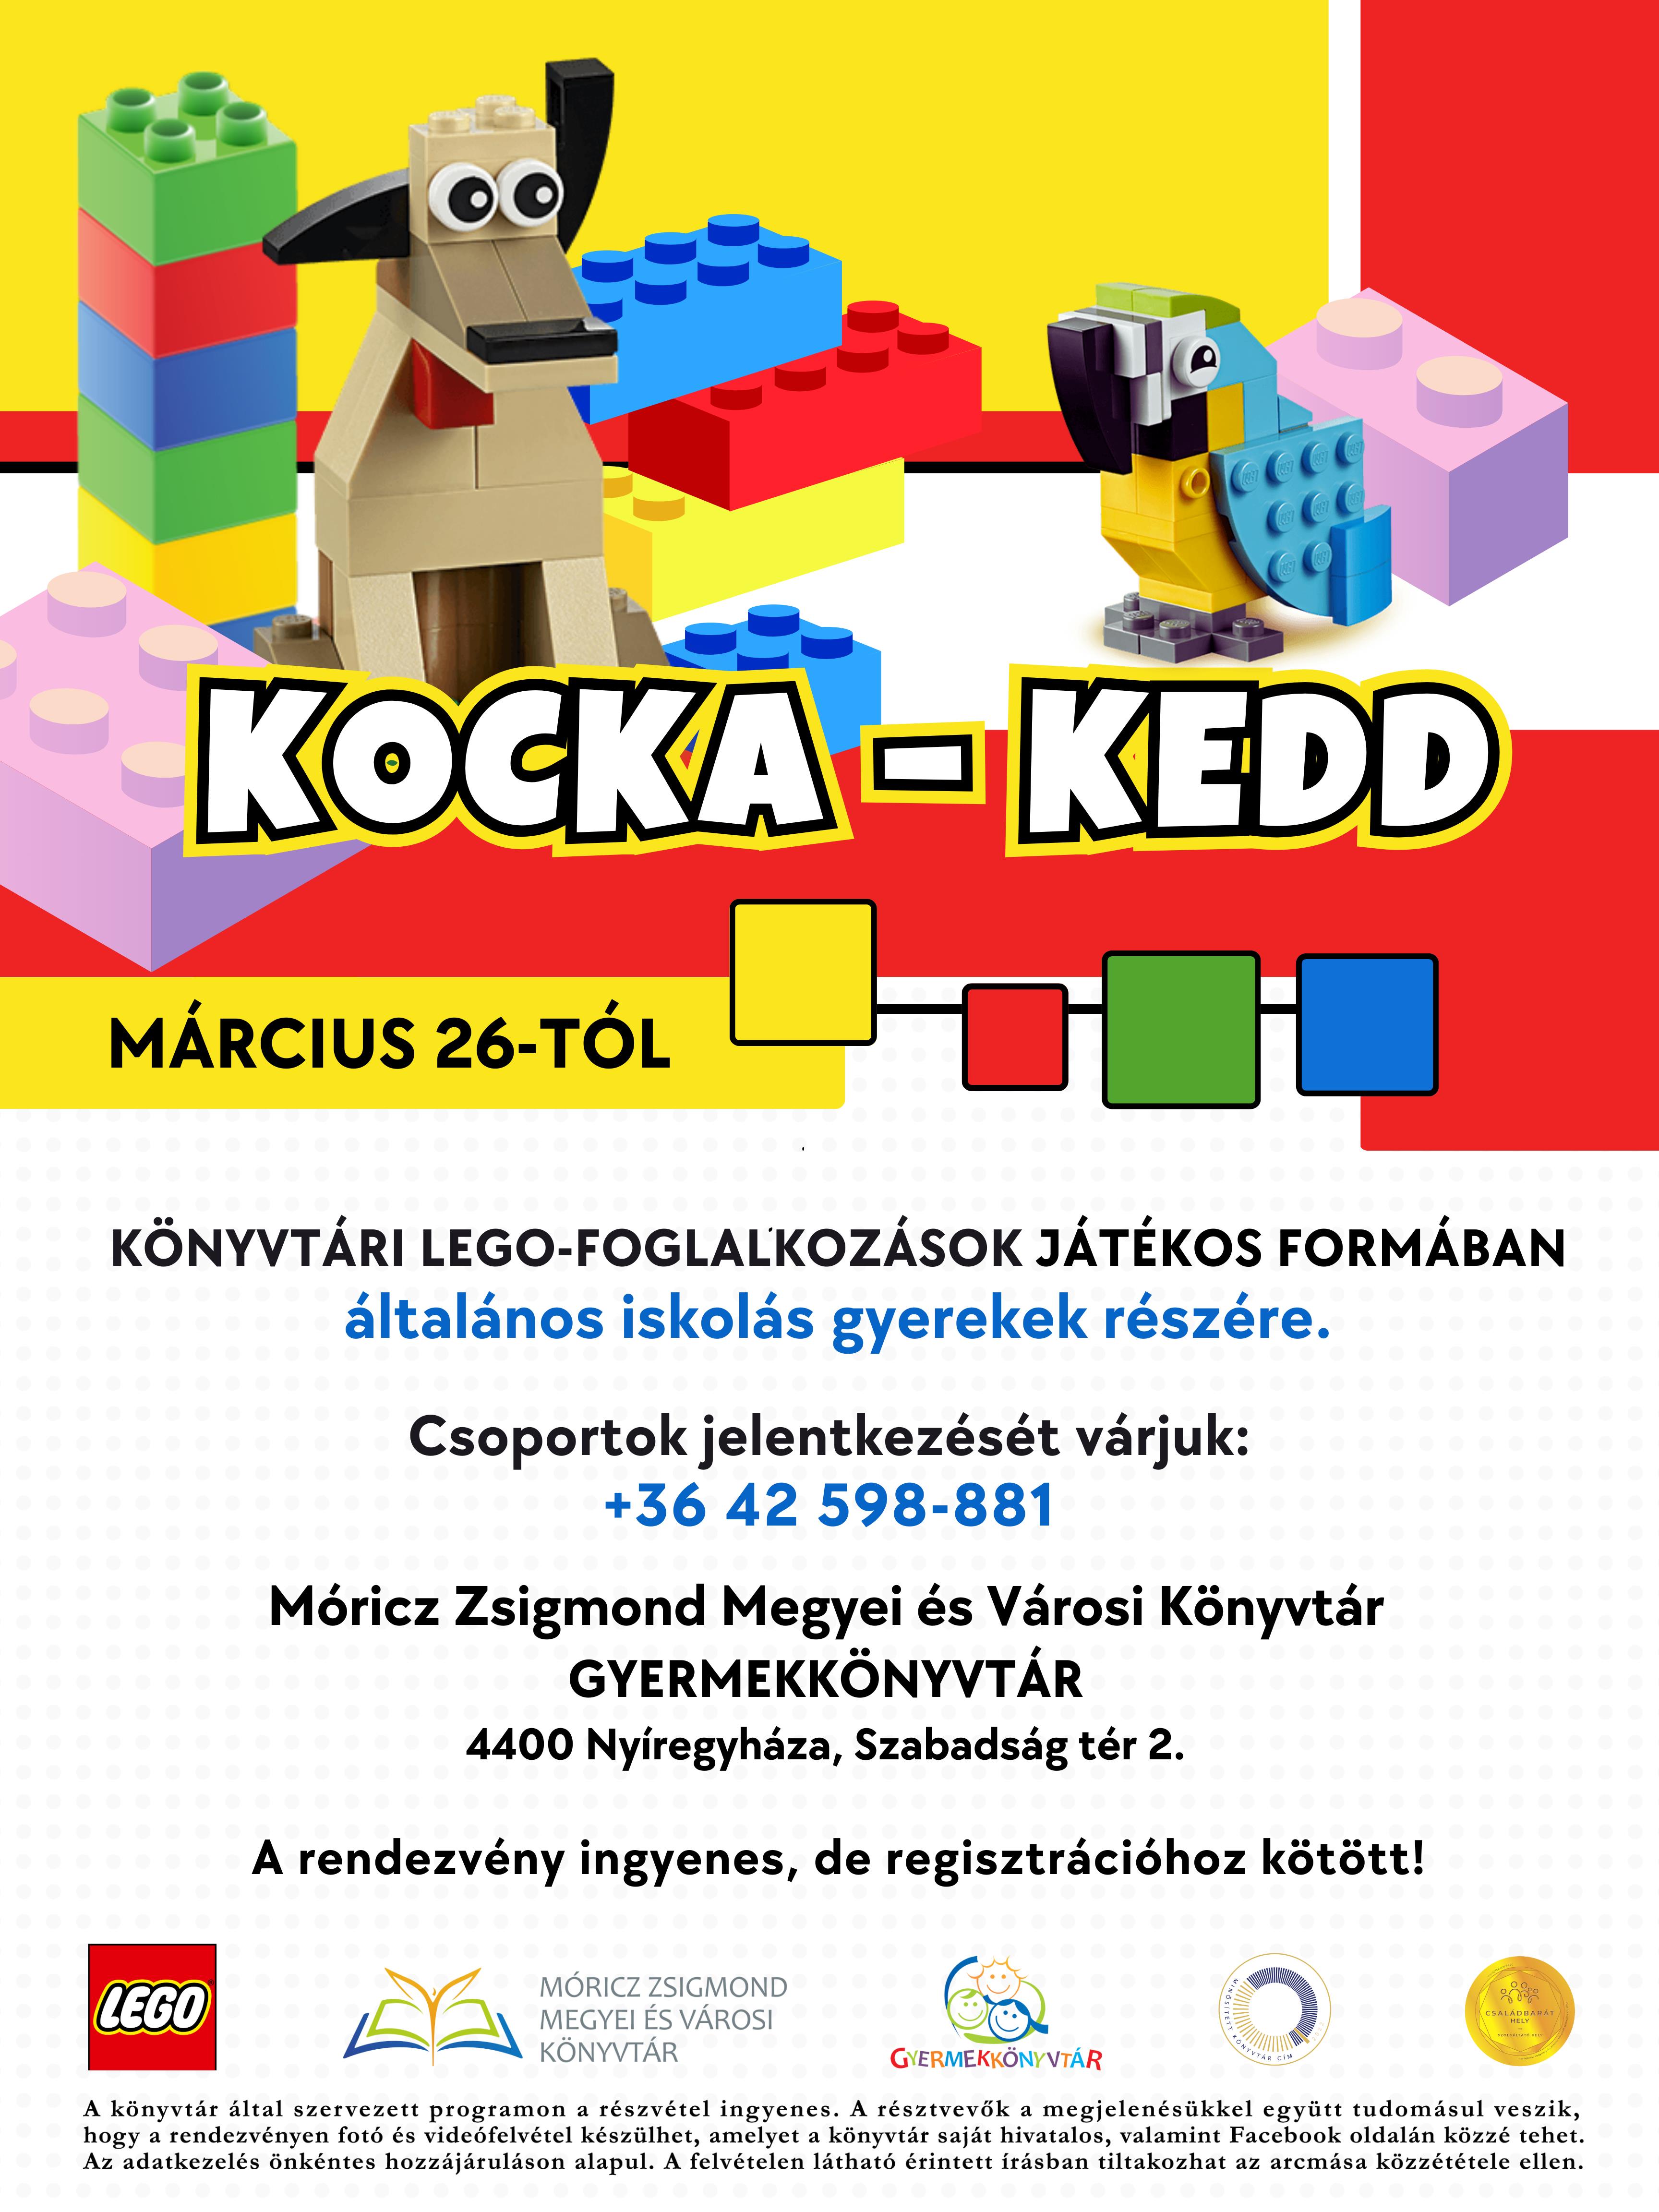 Kocka-Kedd_foglalk_0326-tól_plakát